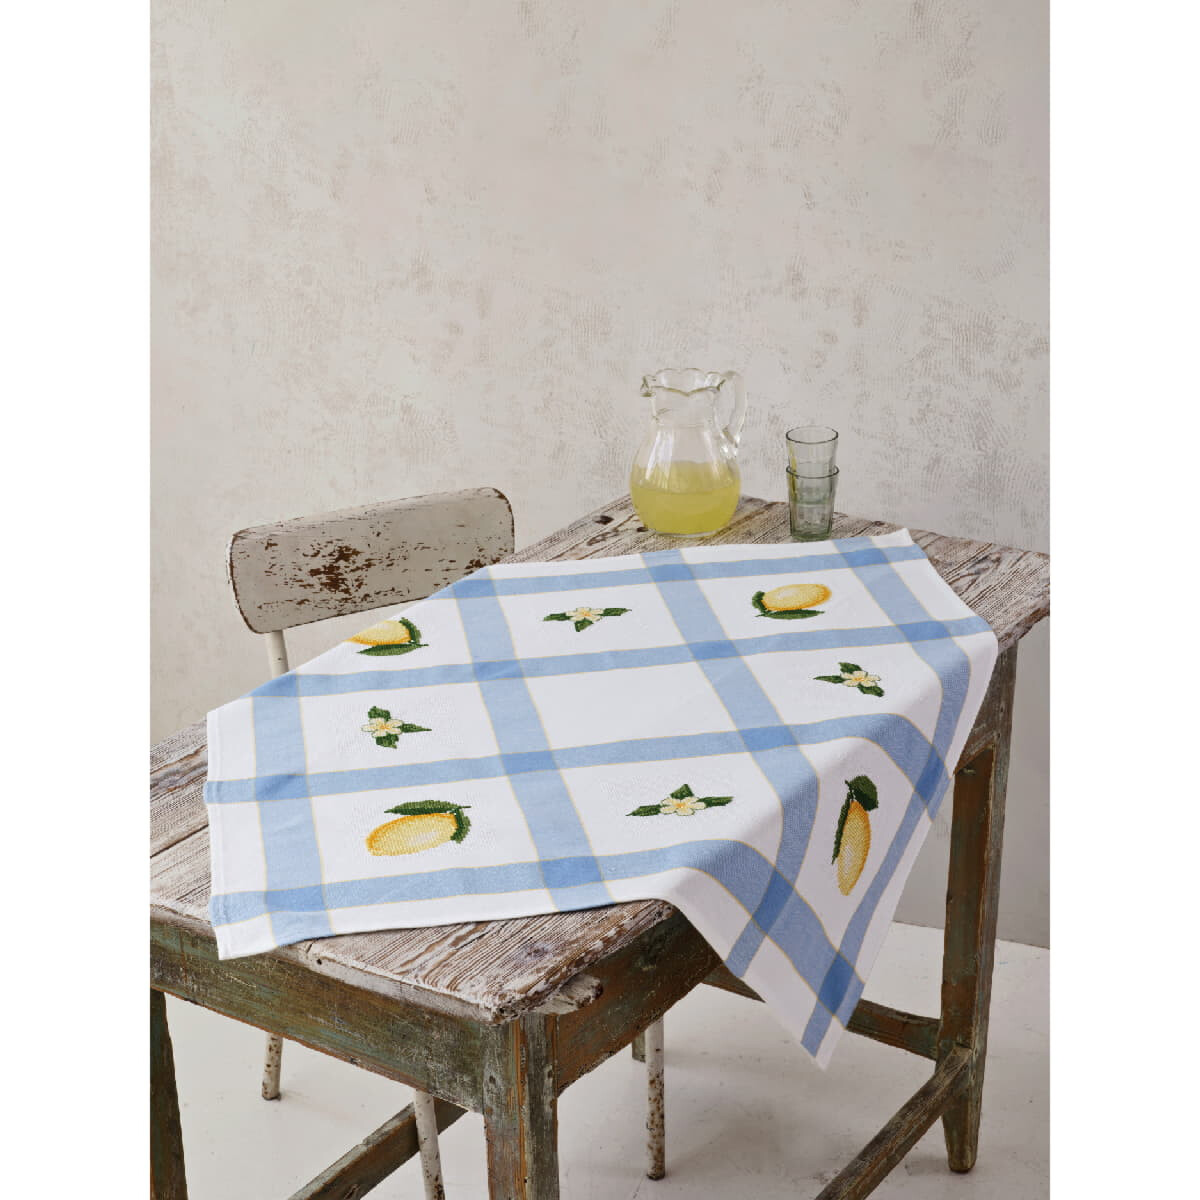 Permin tablechloth counted cross stitch kit "Lemon...